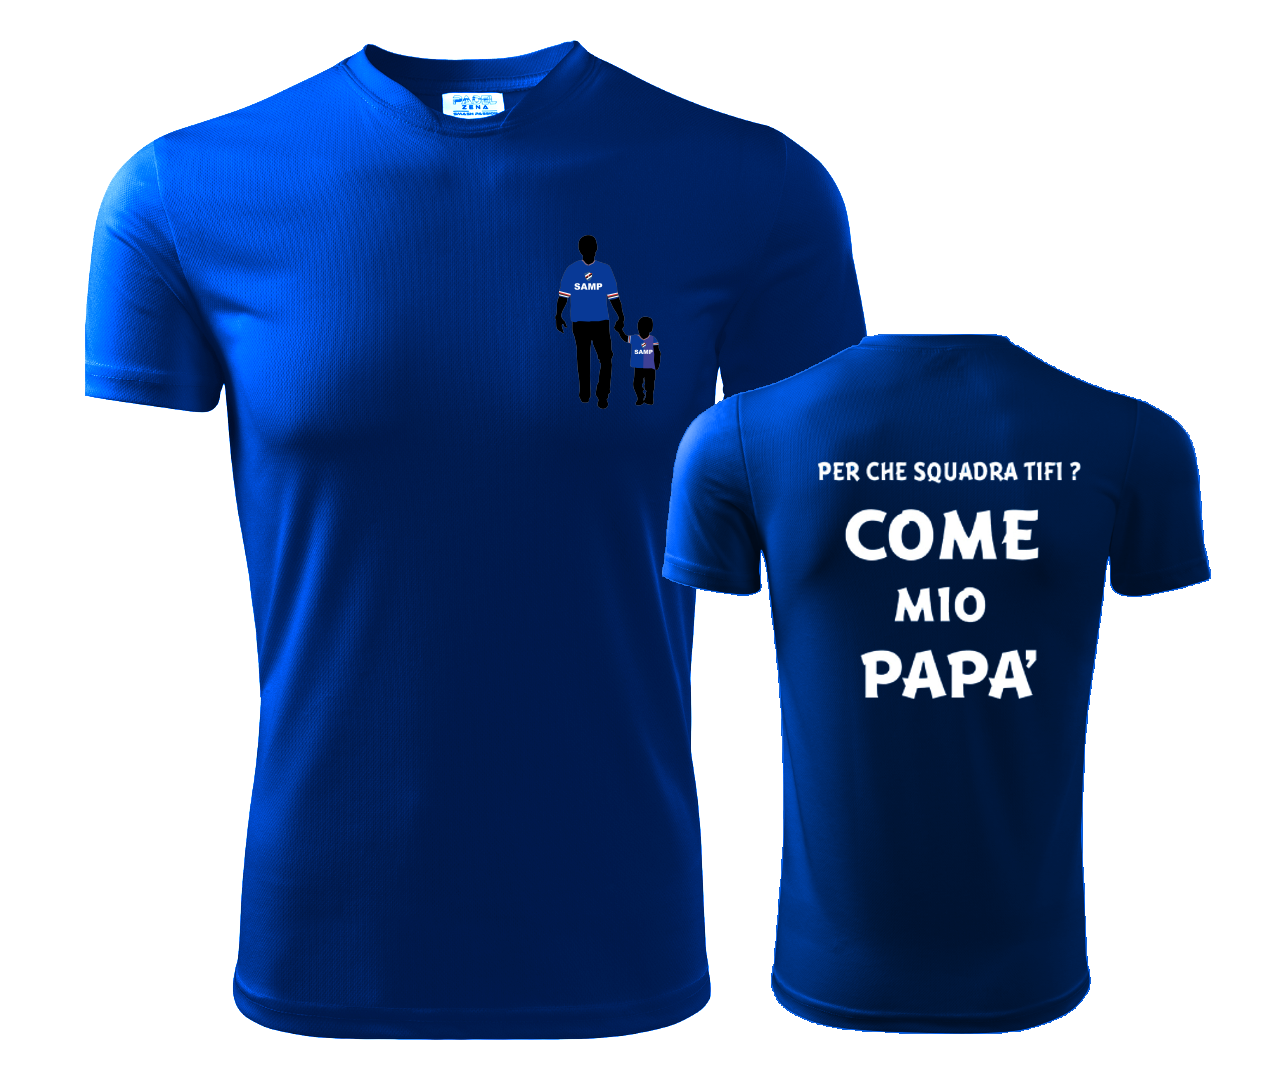 T-Shirt Baby COME MIO PAPA' Samp